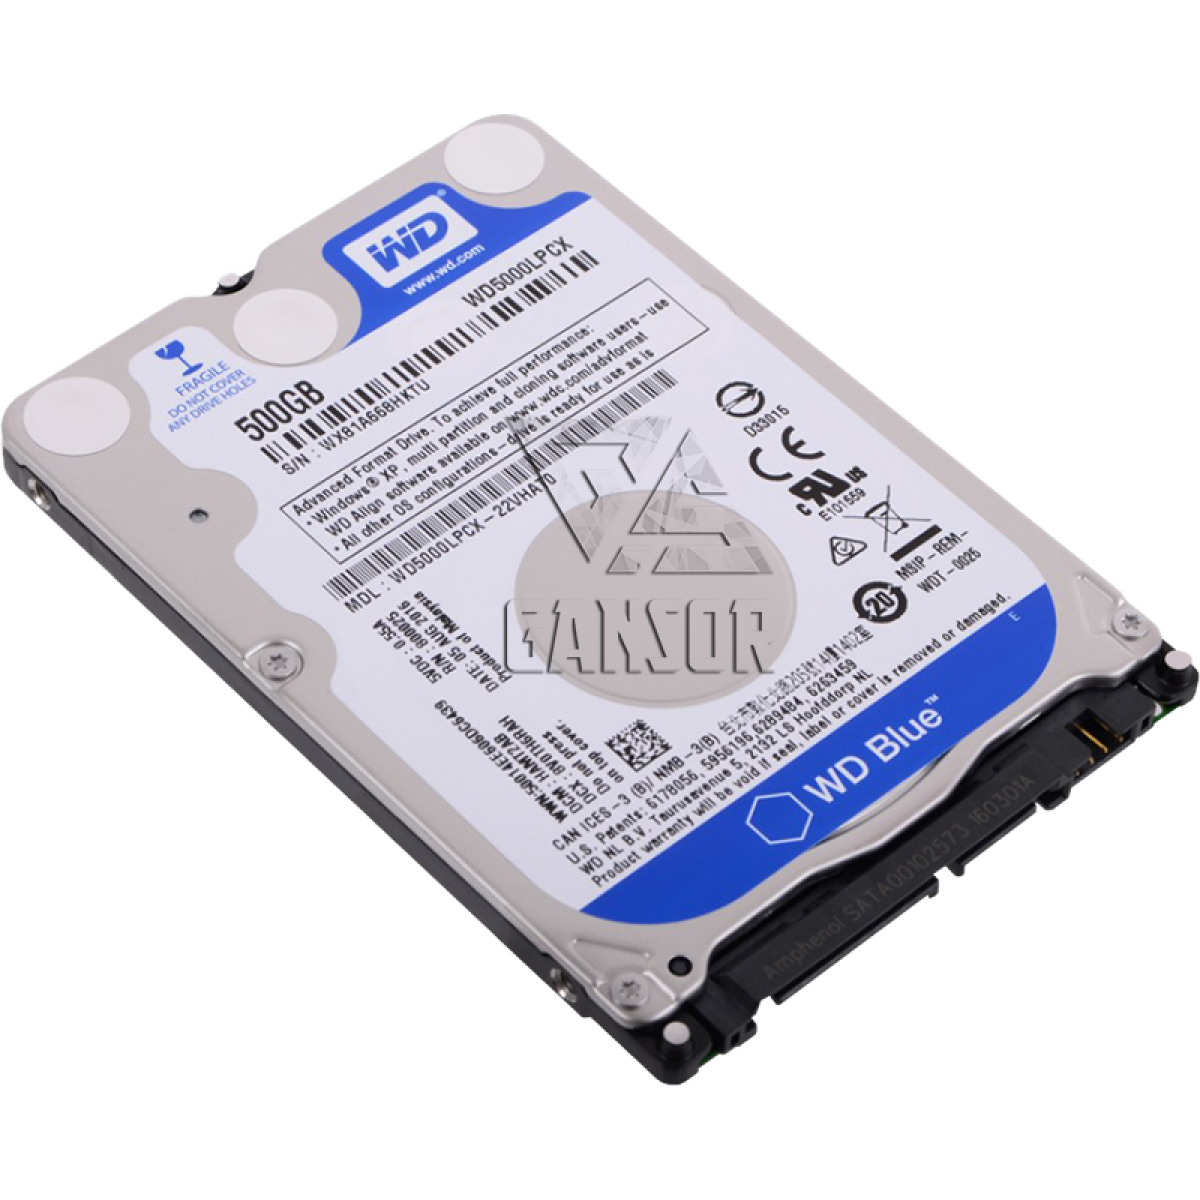 Жёсткий диск WD Blue 500 ГБ. Жесткий диск WD Blue 500 ГБ 2.5. Жесткий диск WD Blue wd5000lpzx, 500гб, HDD, SATA III, 2.5". Жёсткий диск Western Digital 500 ГБ Blue.